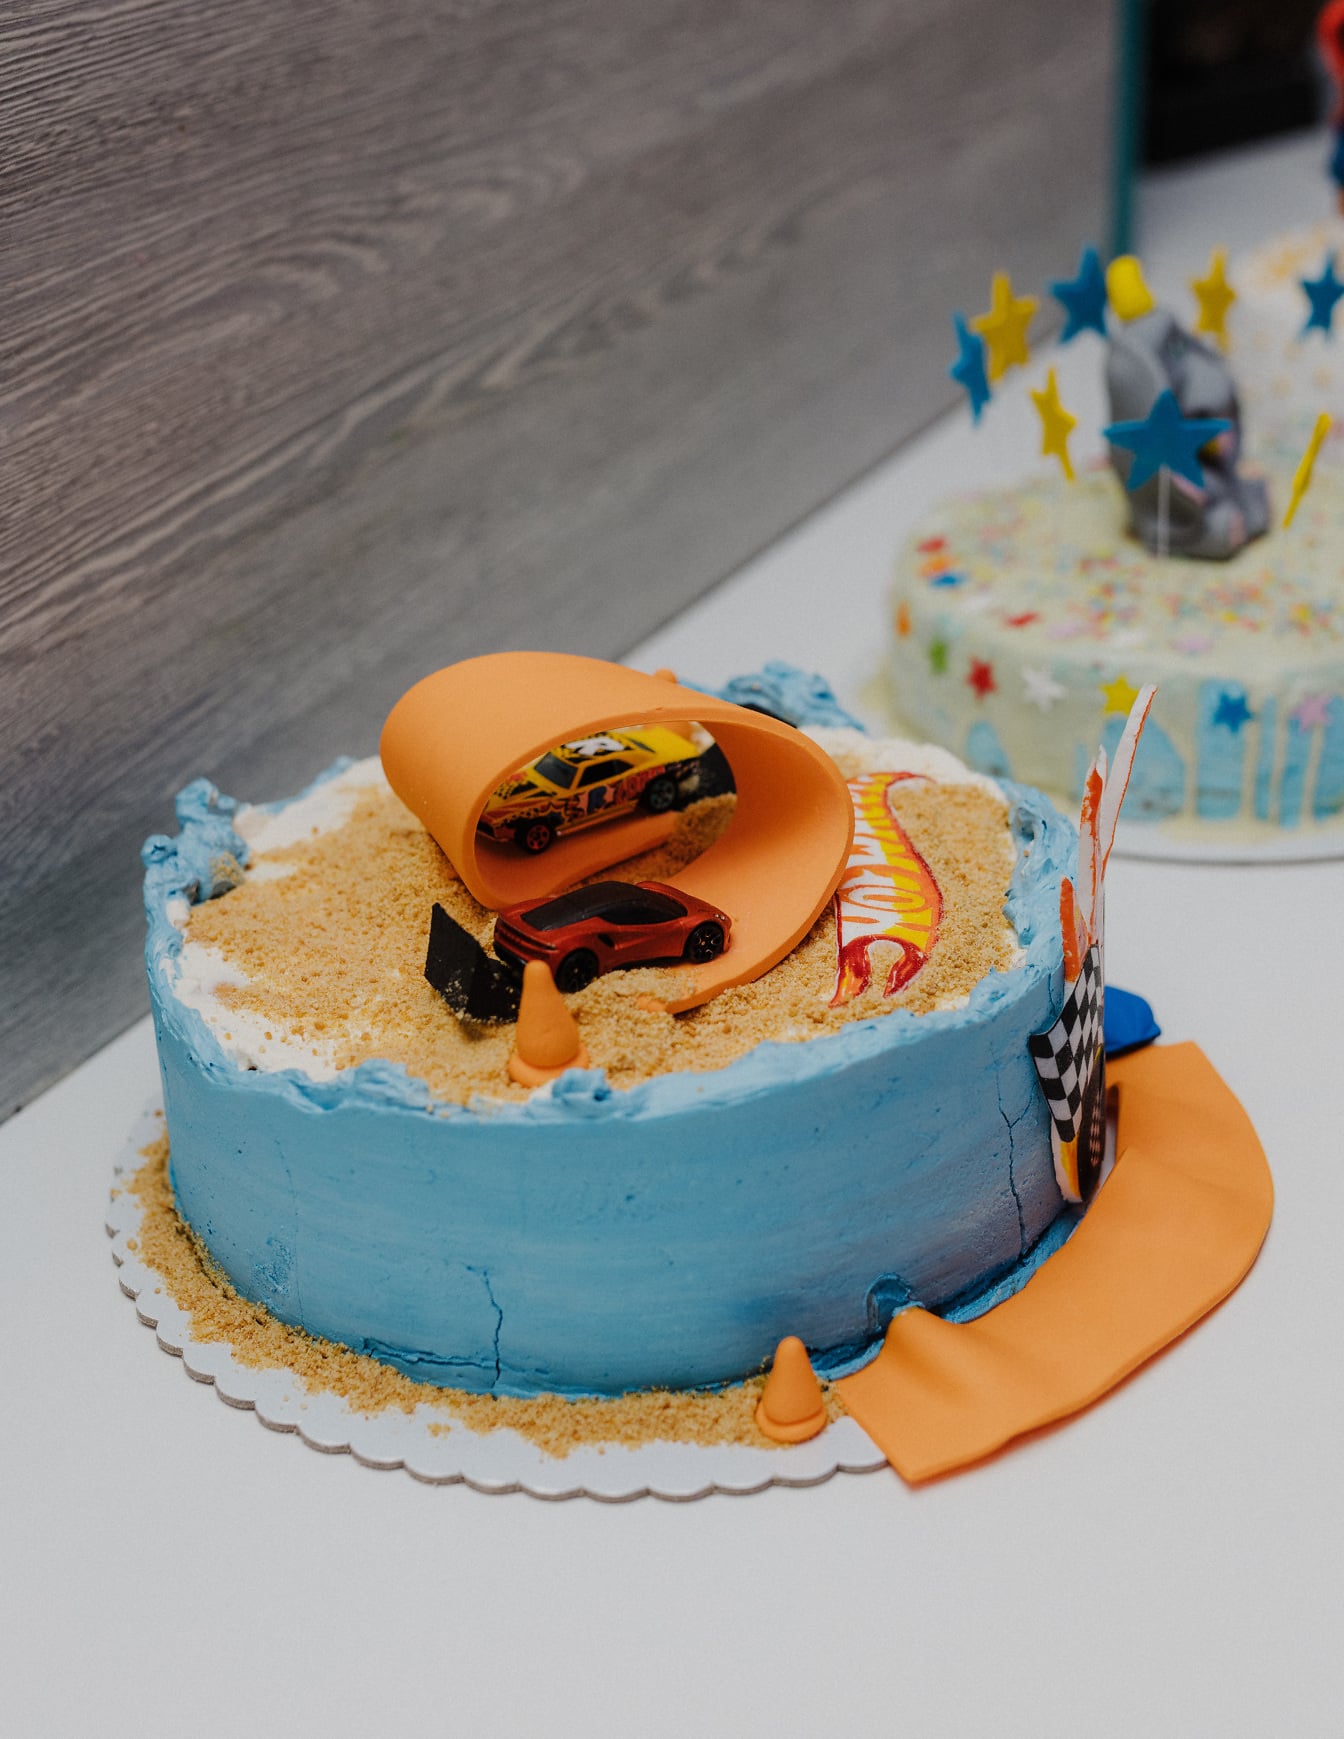 Pesta ulang tahun dengan cace ulang tahun dengan mainan mobil trek balap